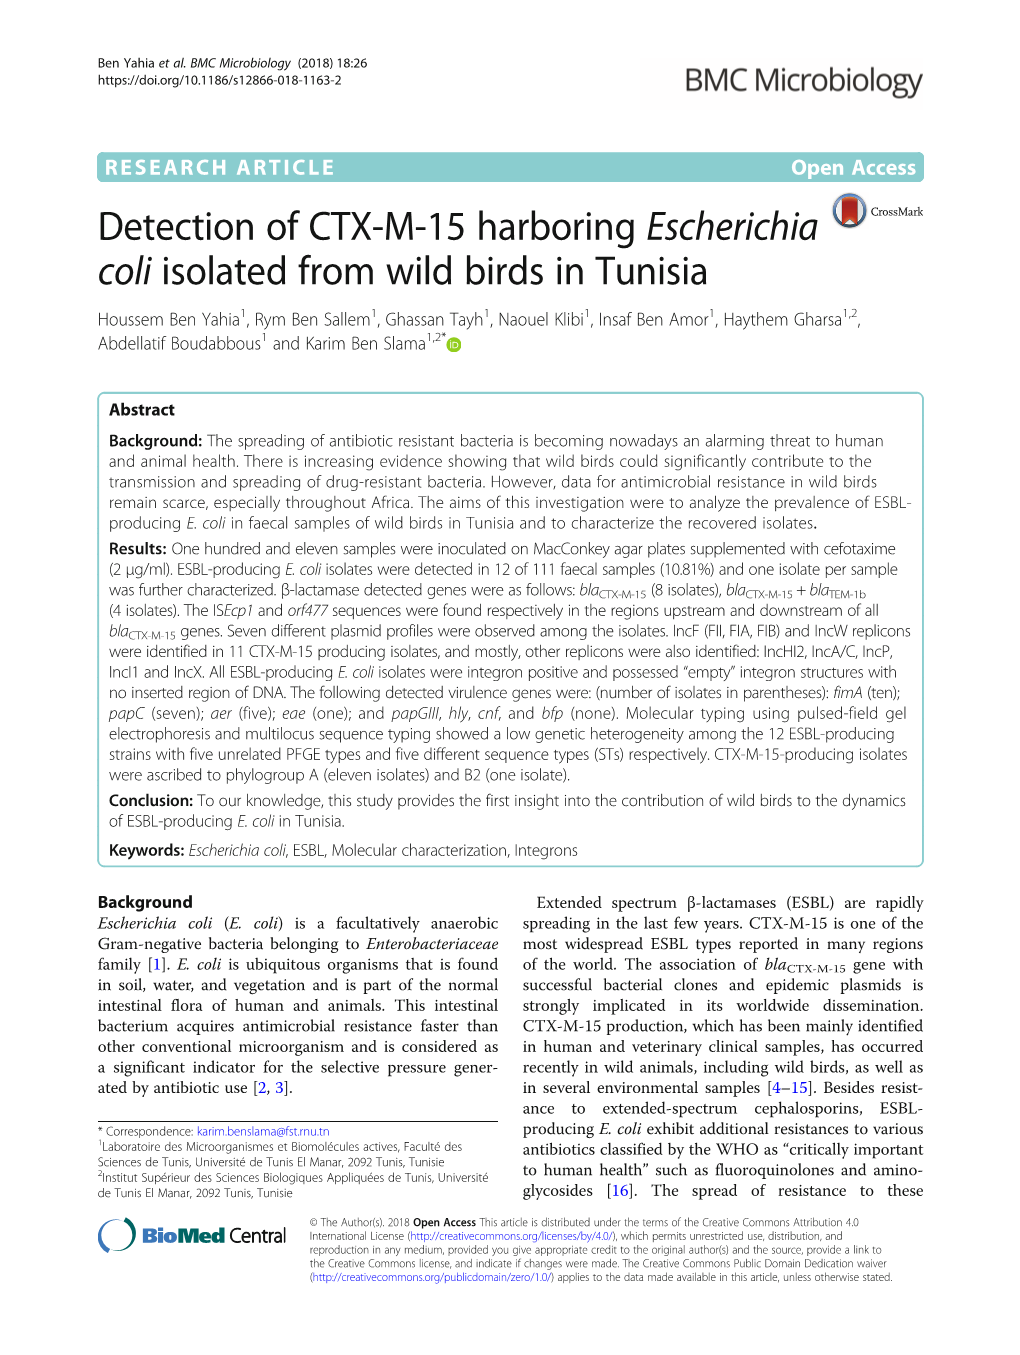 Detection of CTX-M-15 Harboring Escherichia Coli Isolated from Wild